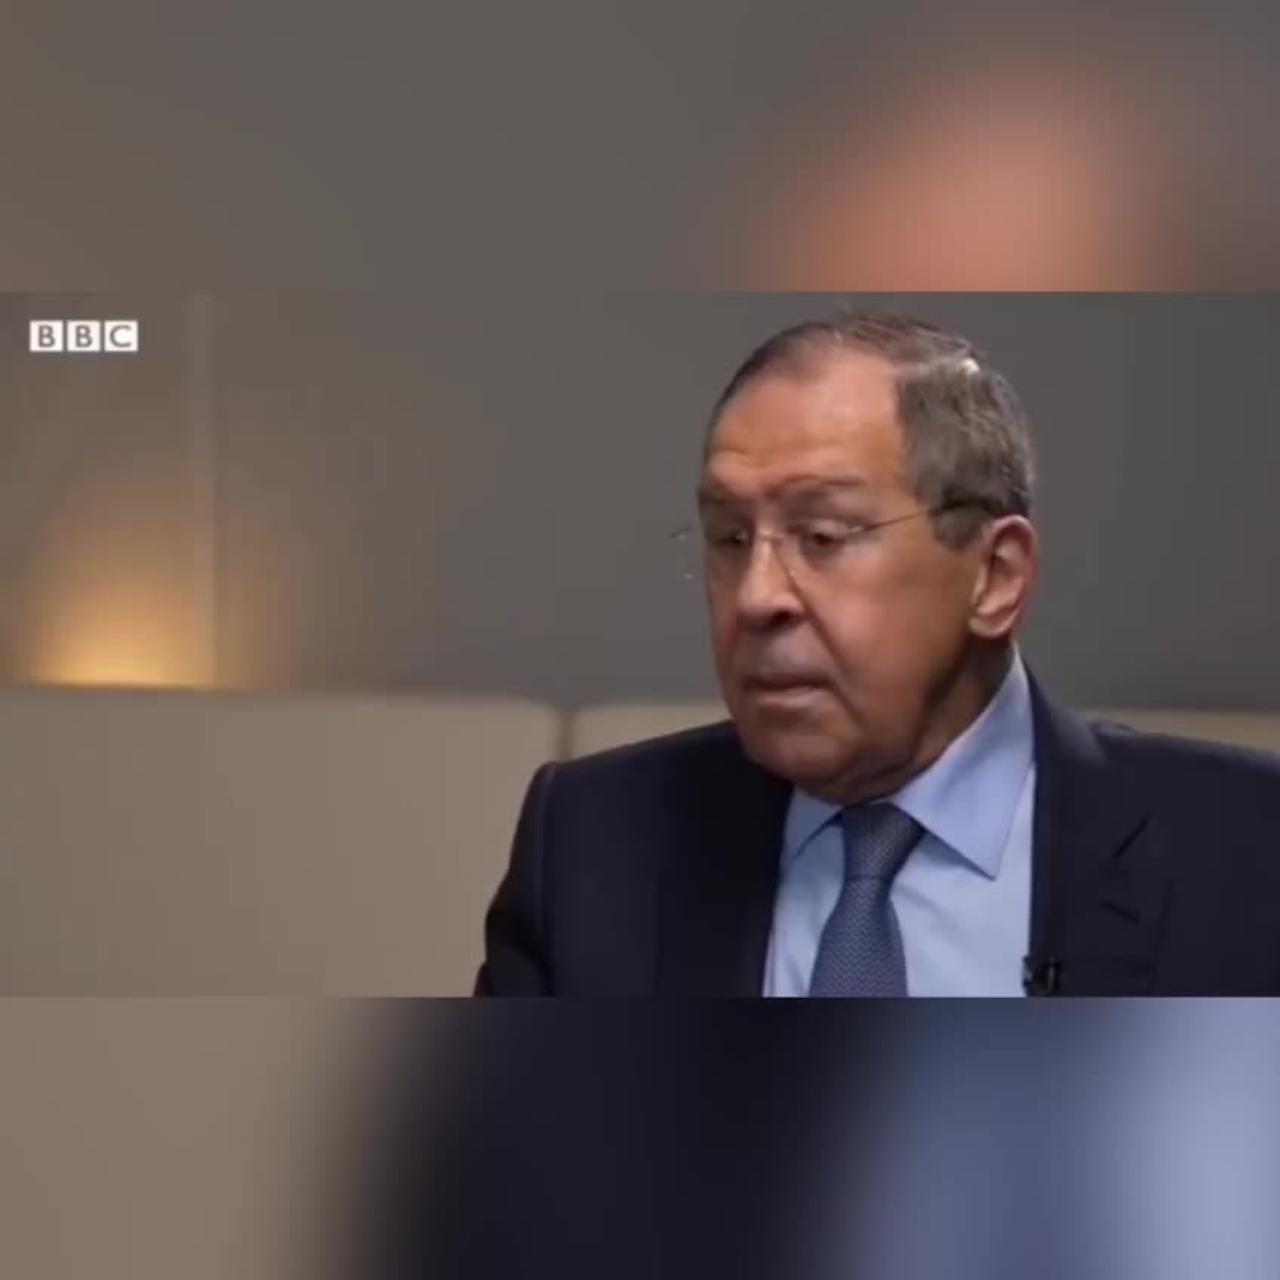 Ukraine War - The inconvenient truth from Lavrov about Britain